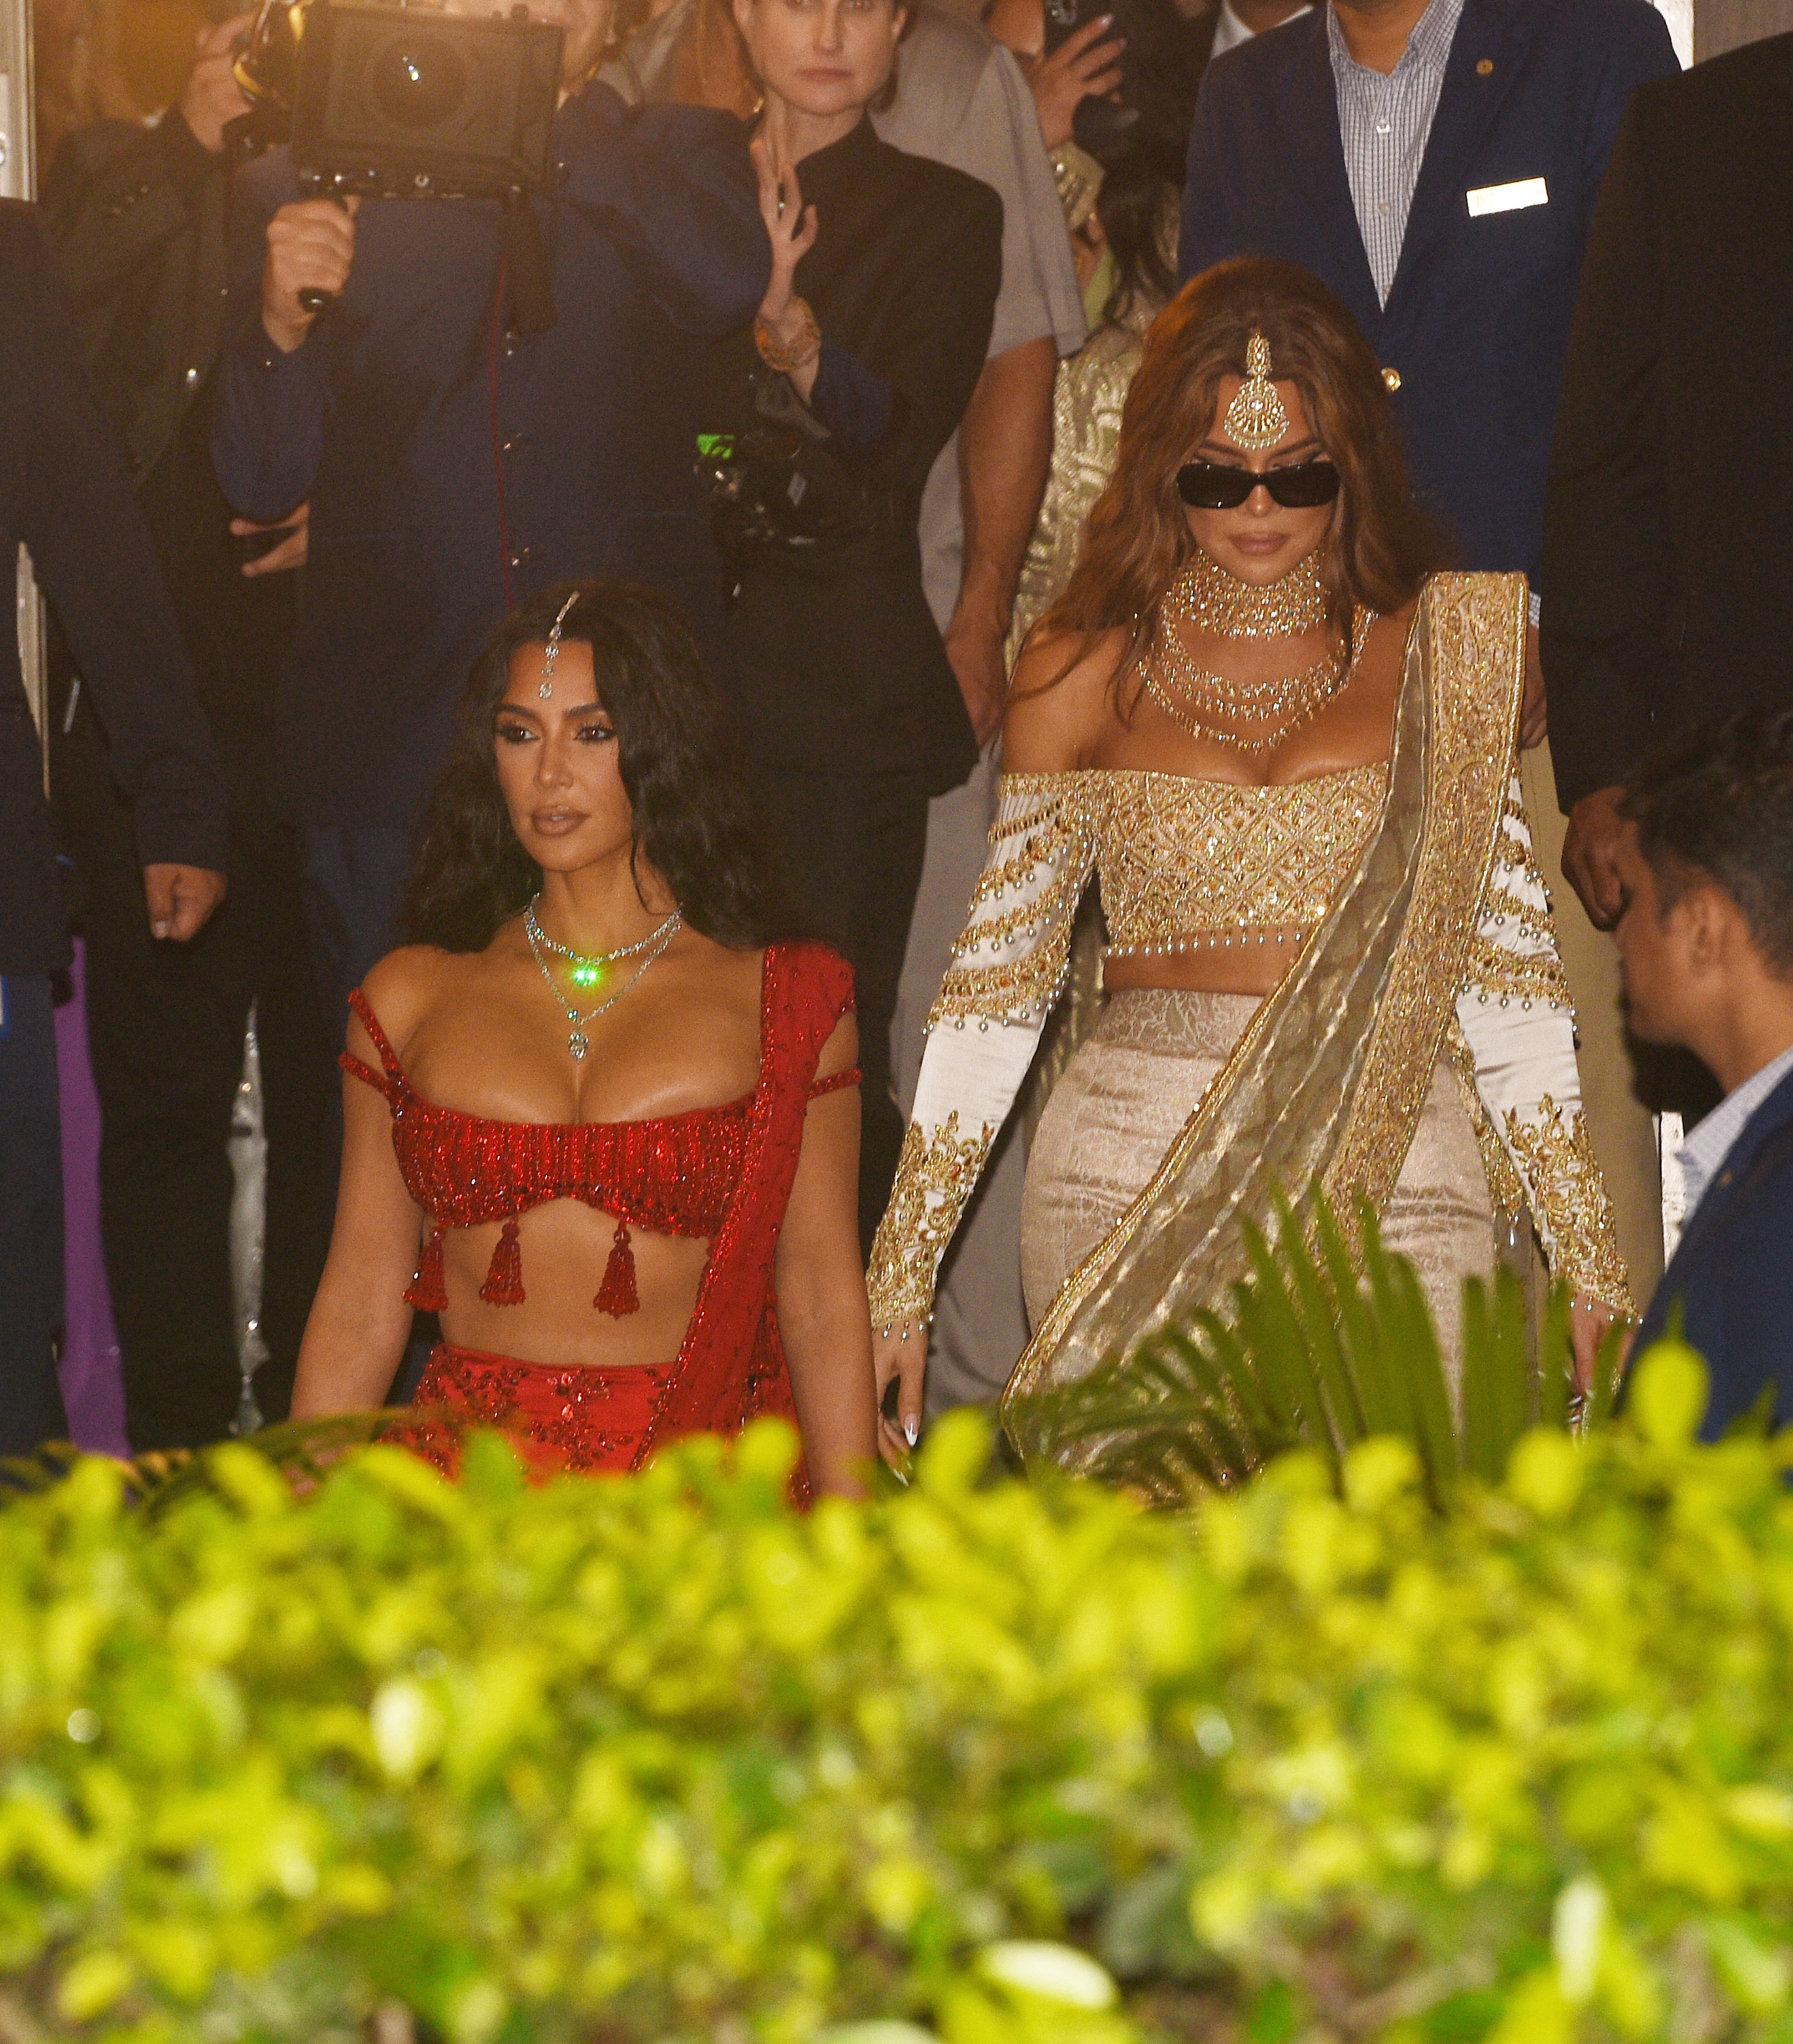 Khloe Kardashian was also in attendance to the lavish wedding